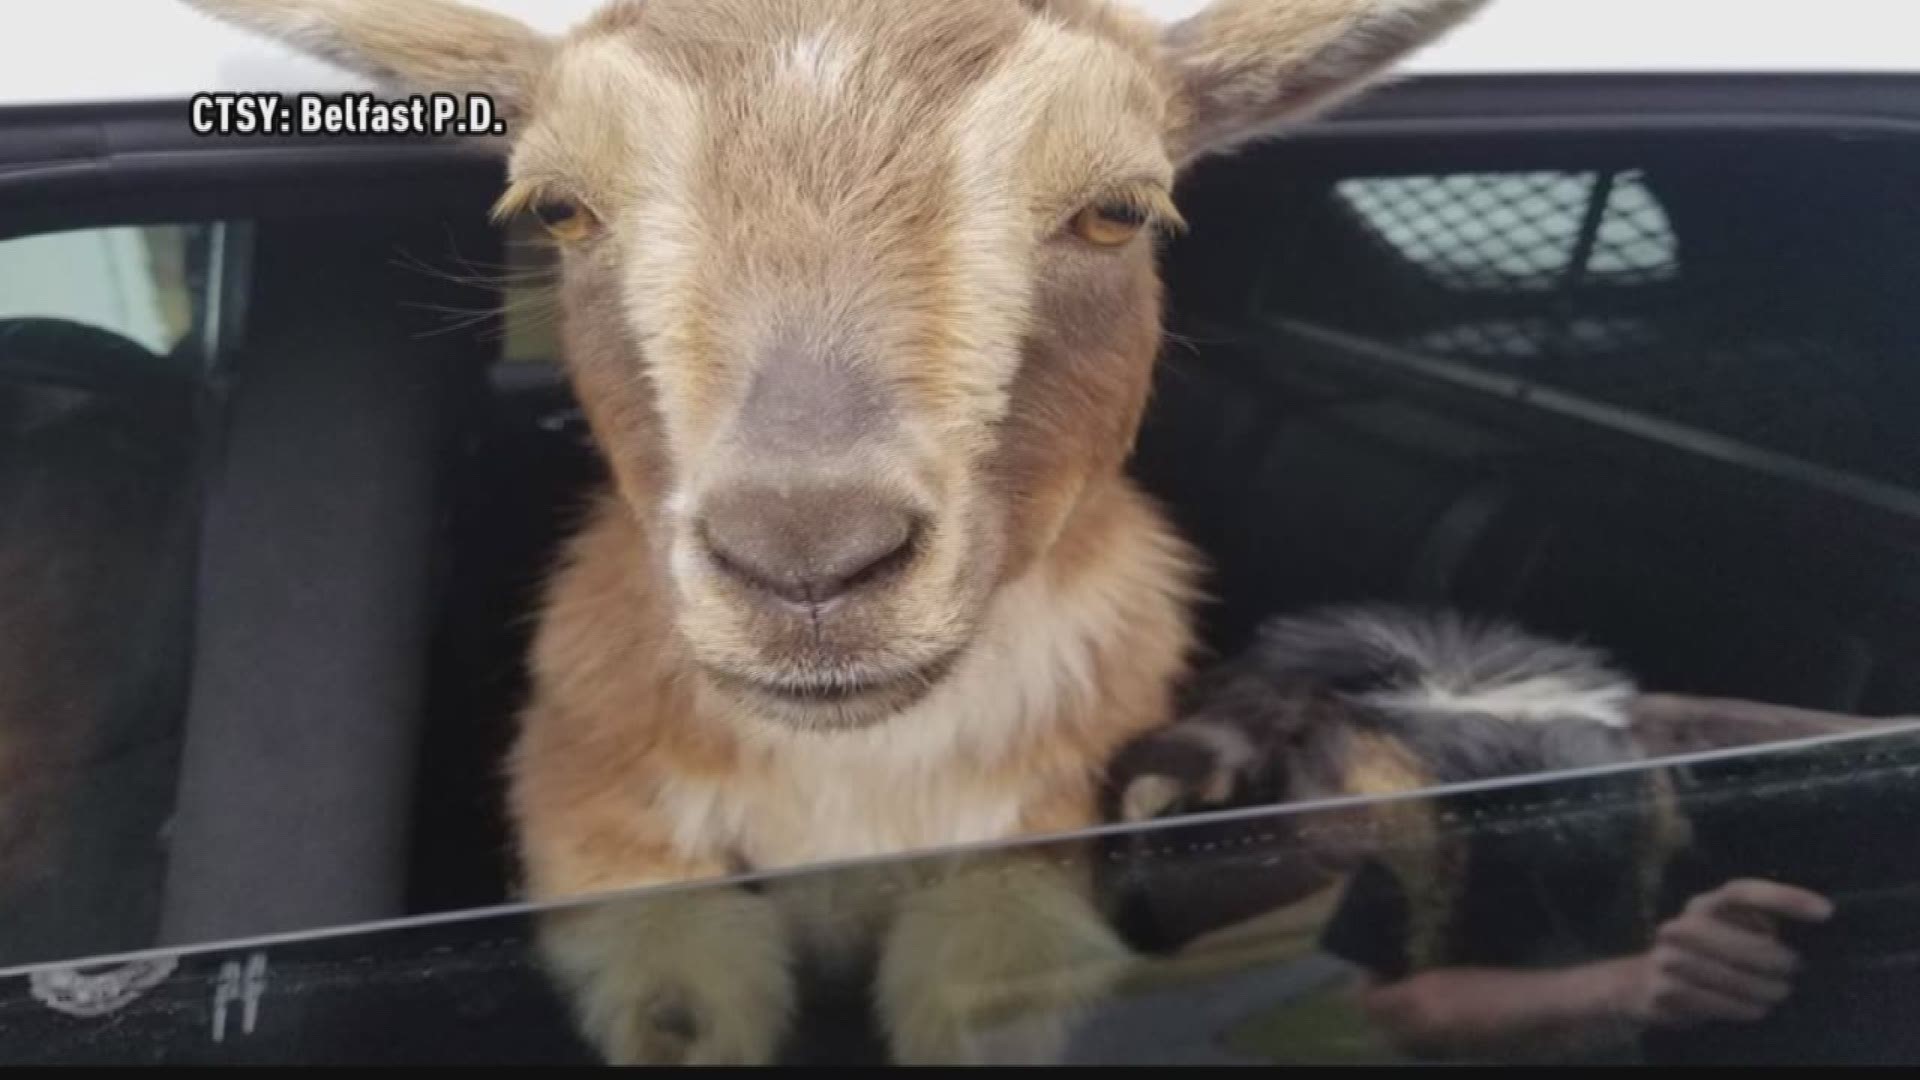 Belfast police rescues rambling goats from roadside.